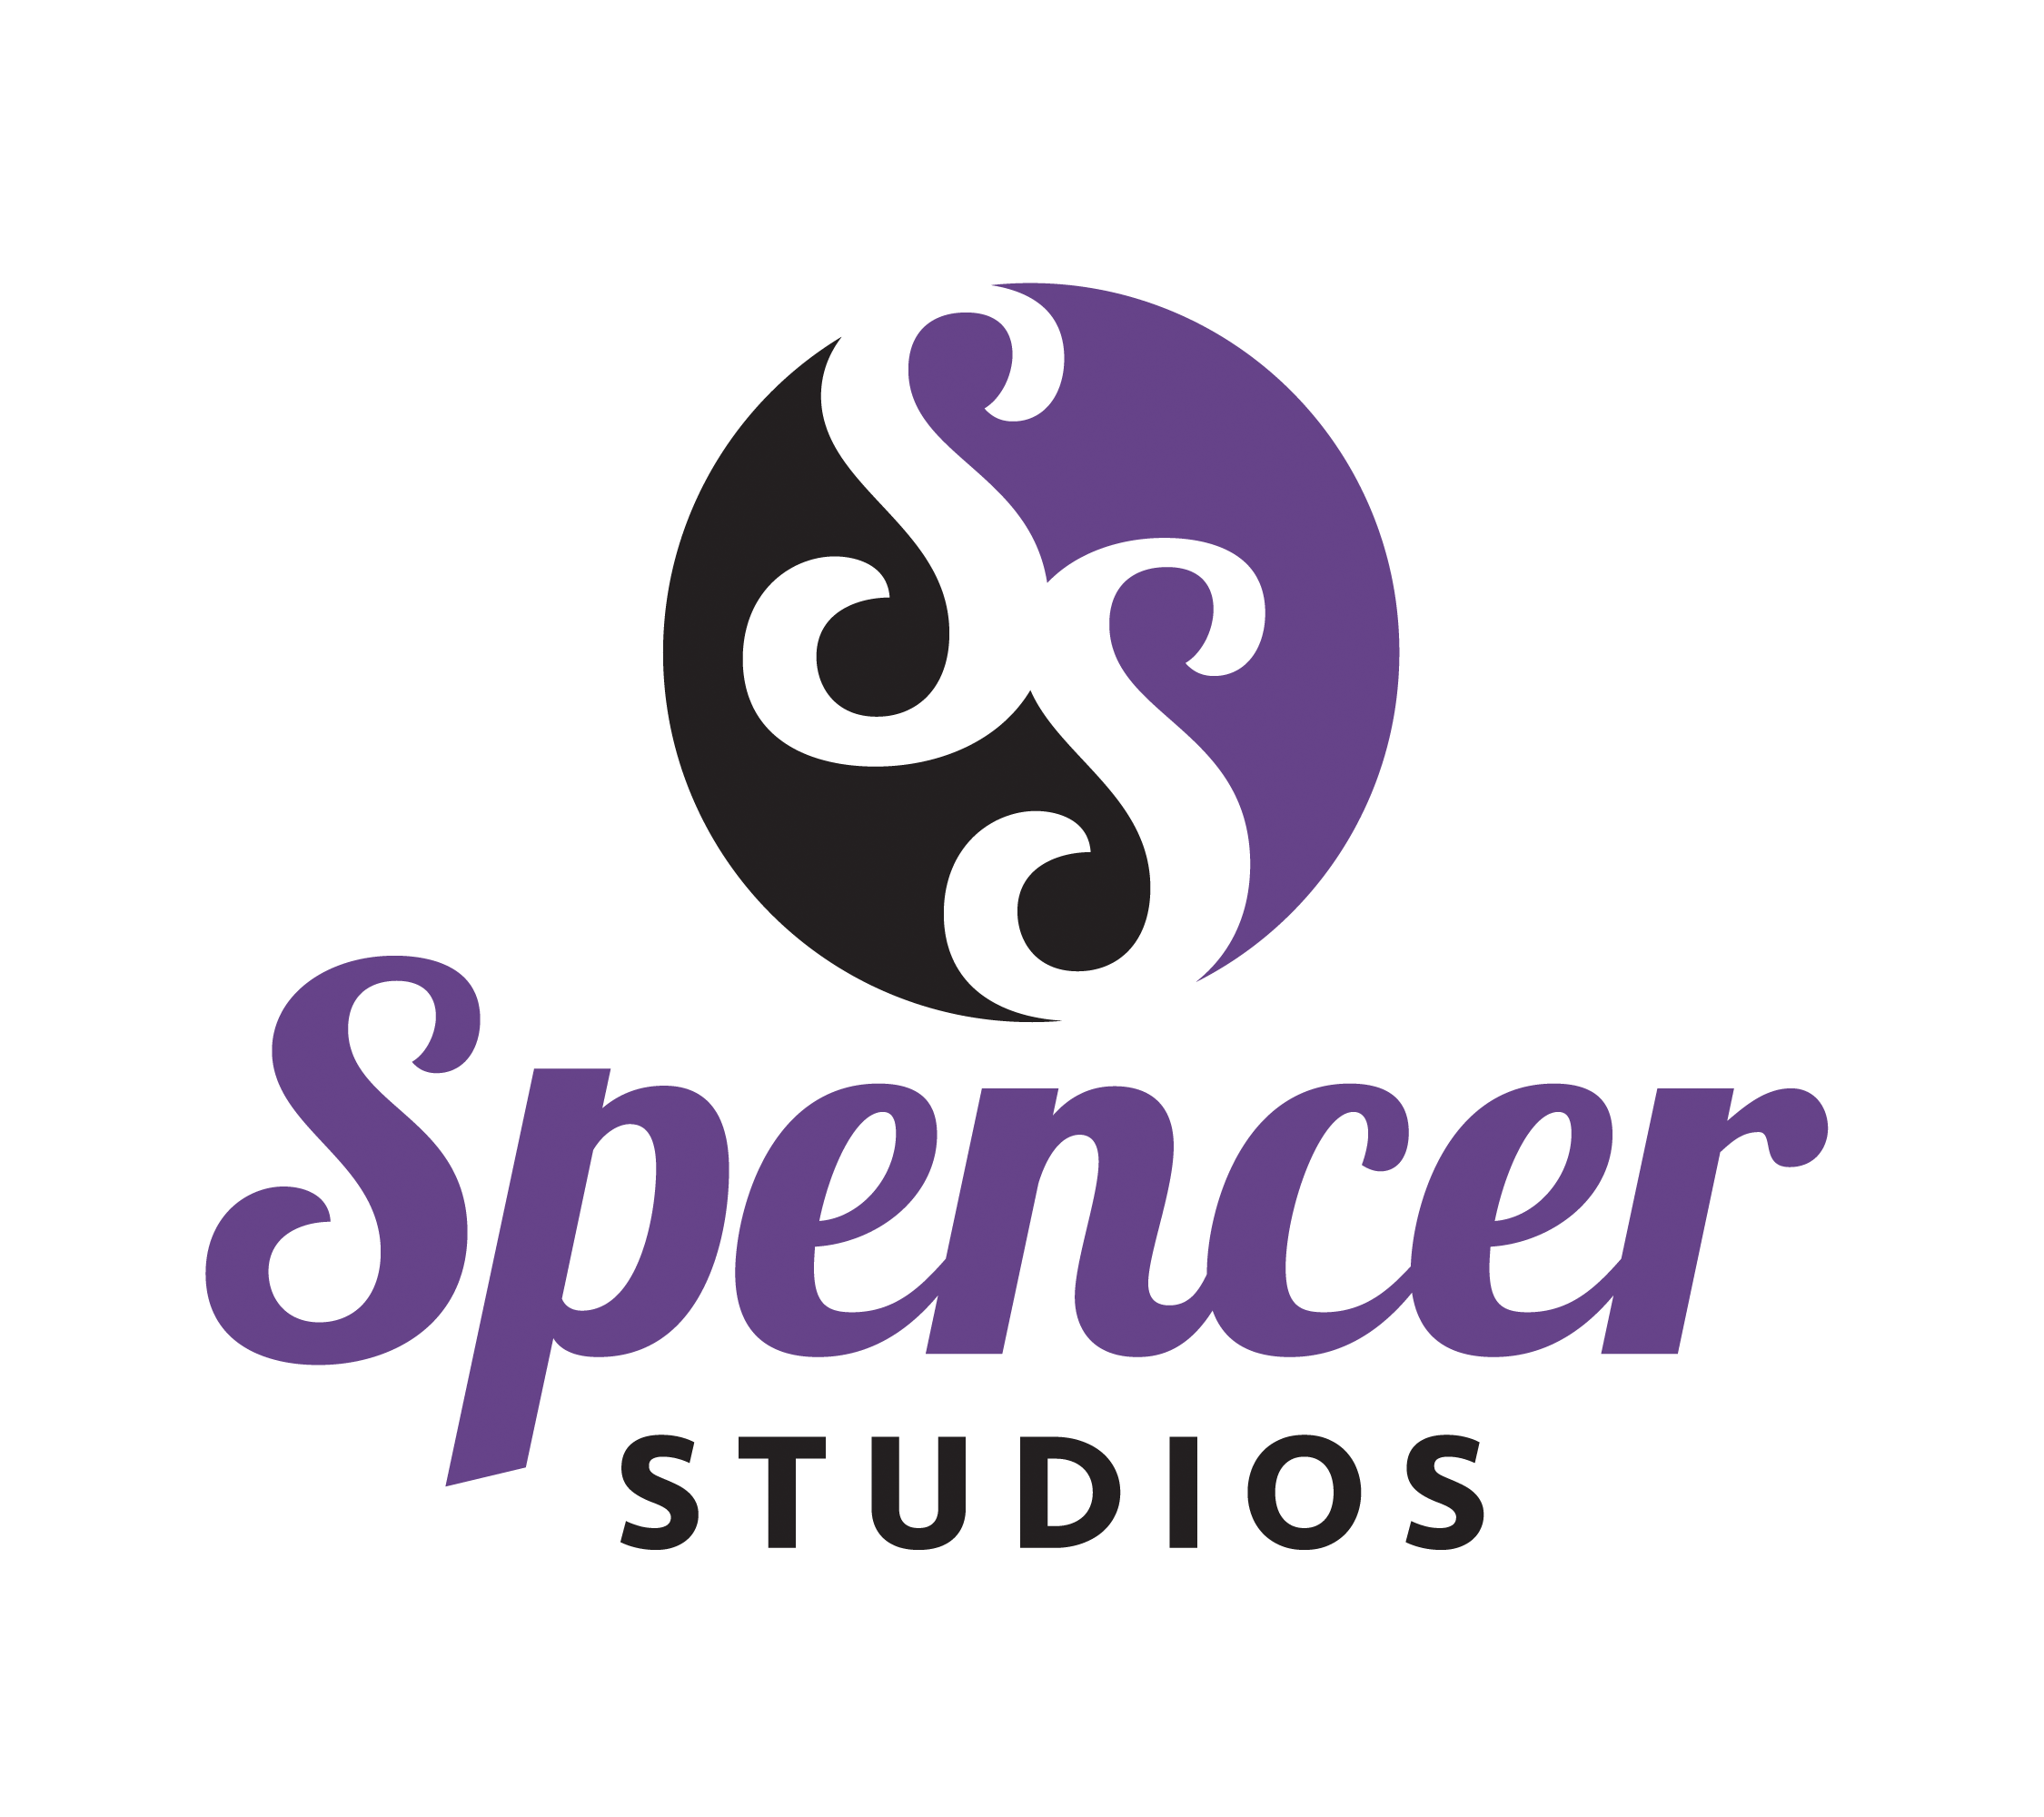 Spencer Studios